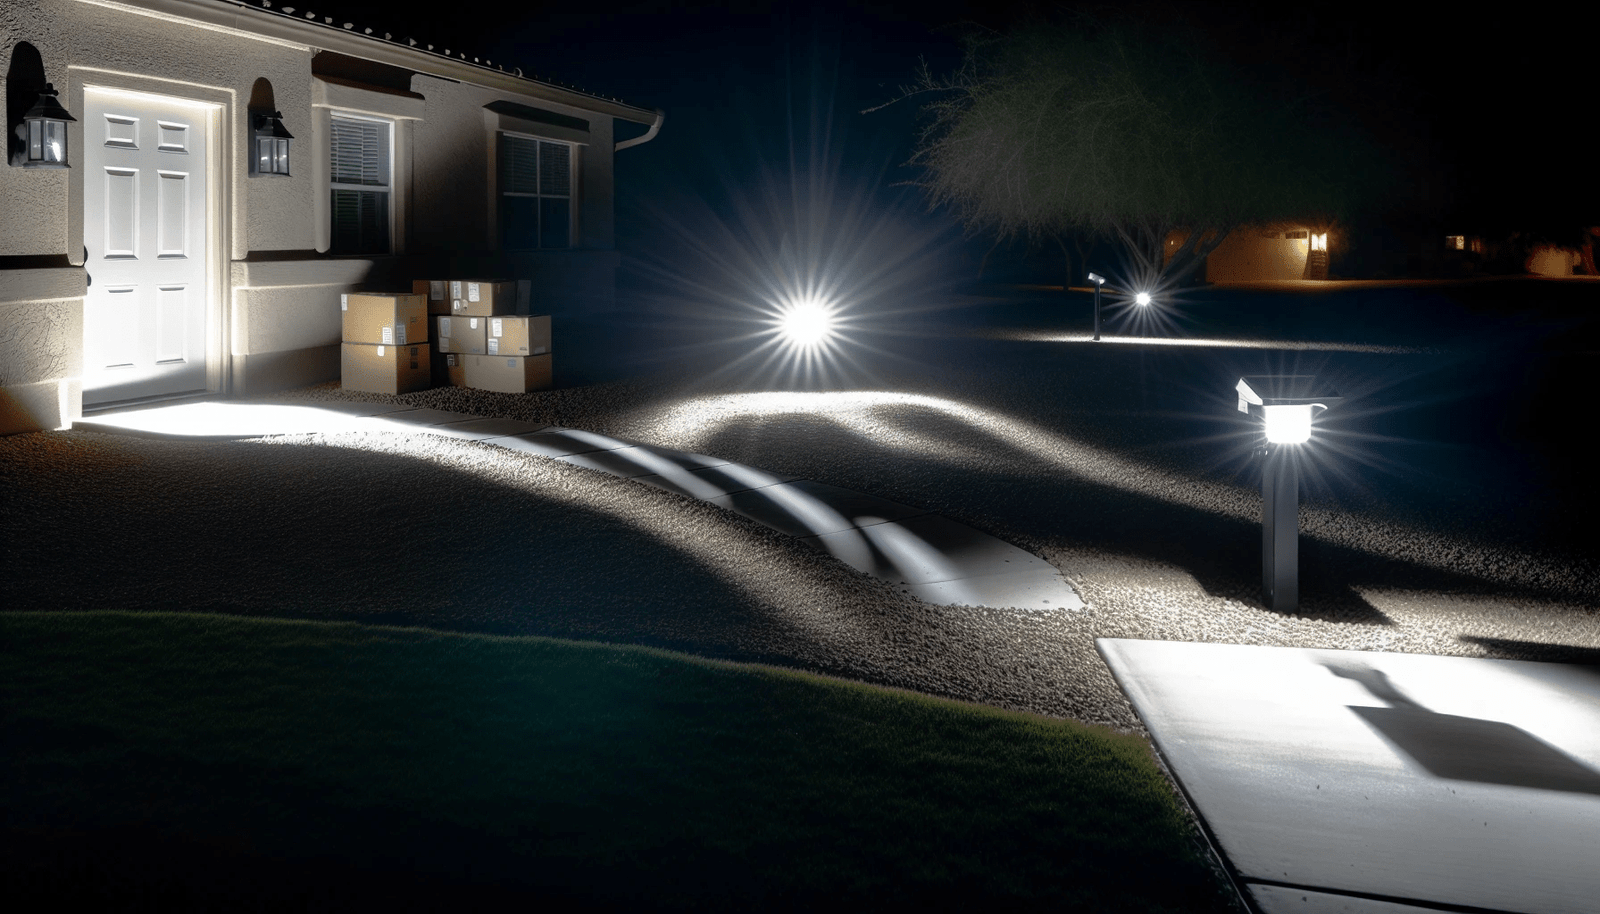 Motion-activated spotlight illuminating property